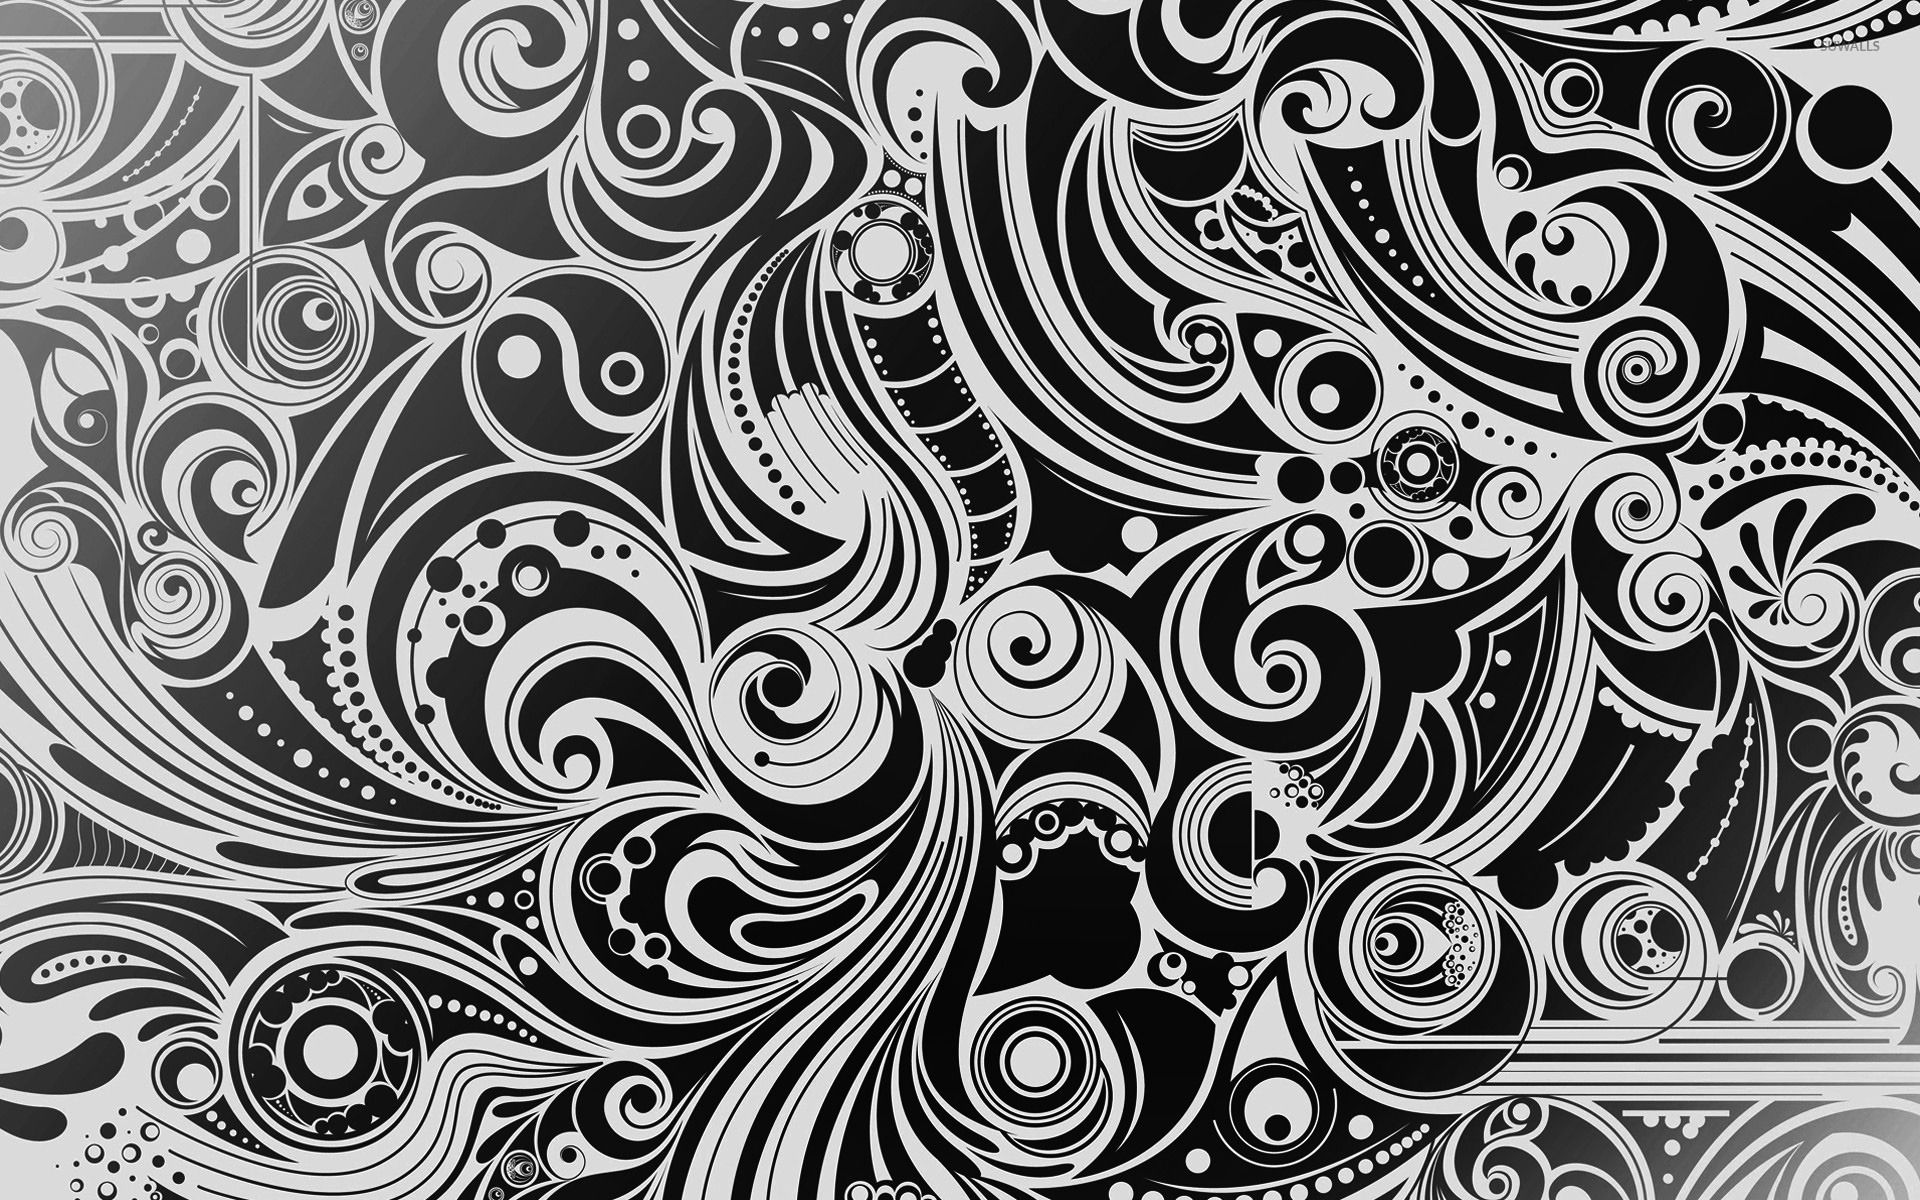 Cosmic Wallpaper 4K, Rainbow, Swirl, Spiral